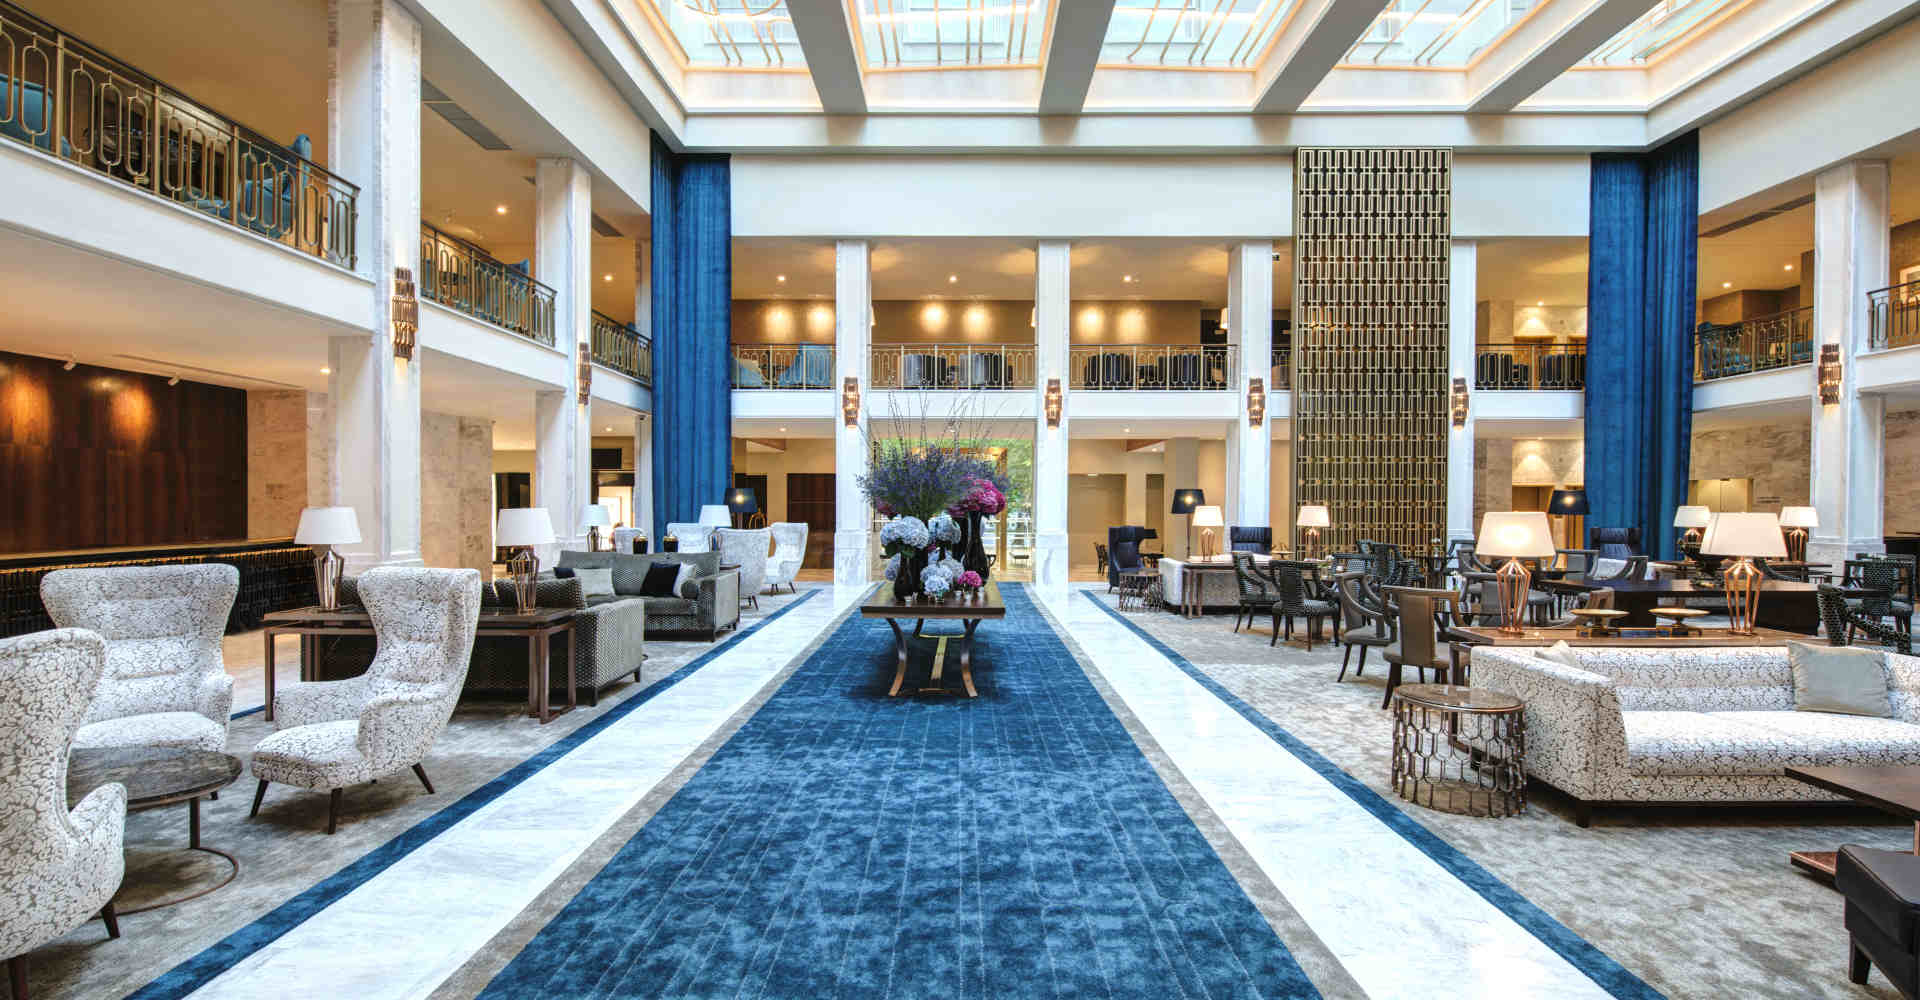 Luxury Hotels and Resorts | About Tivoli Hotels & Resorts